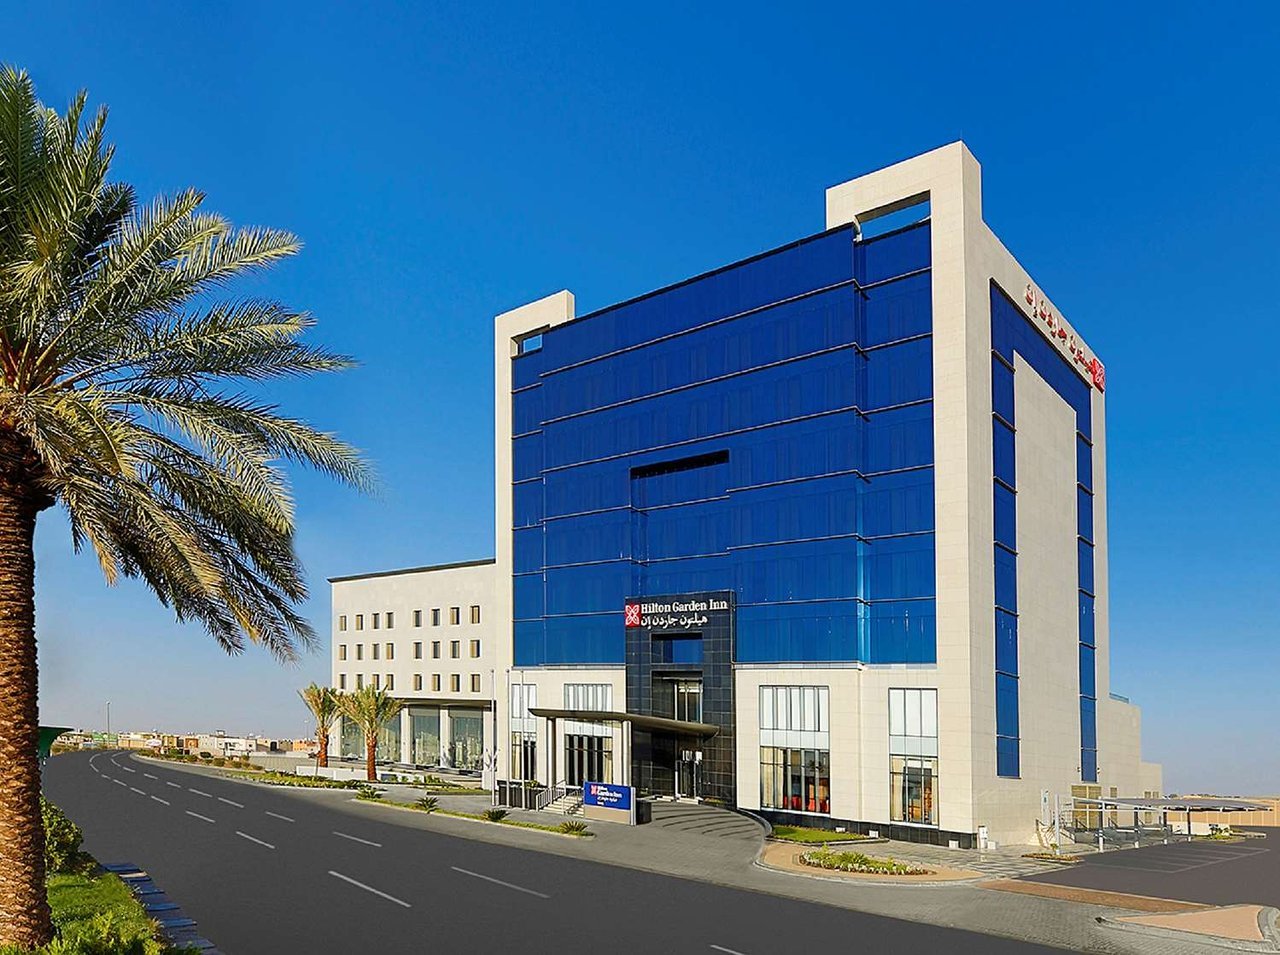 Photo of Hilton Garden Inn Tabuk, Tabuk, Saudi Arabia